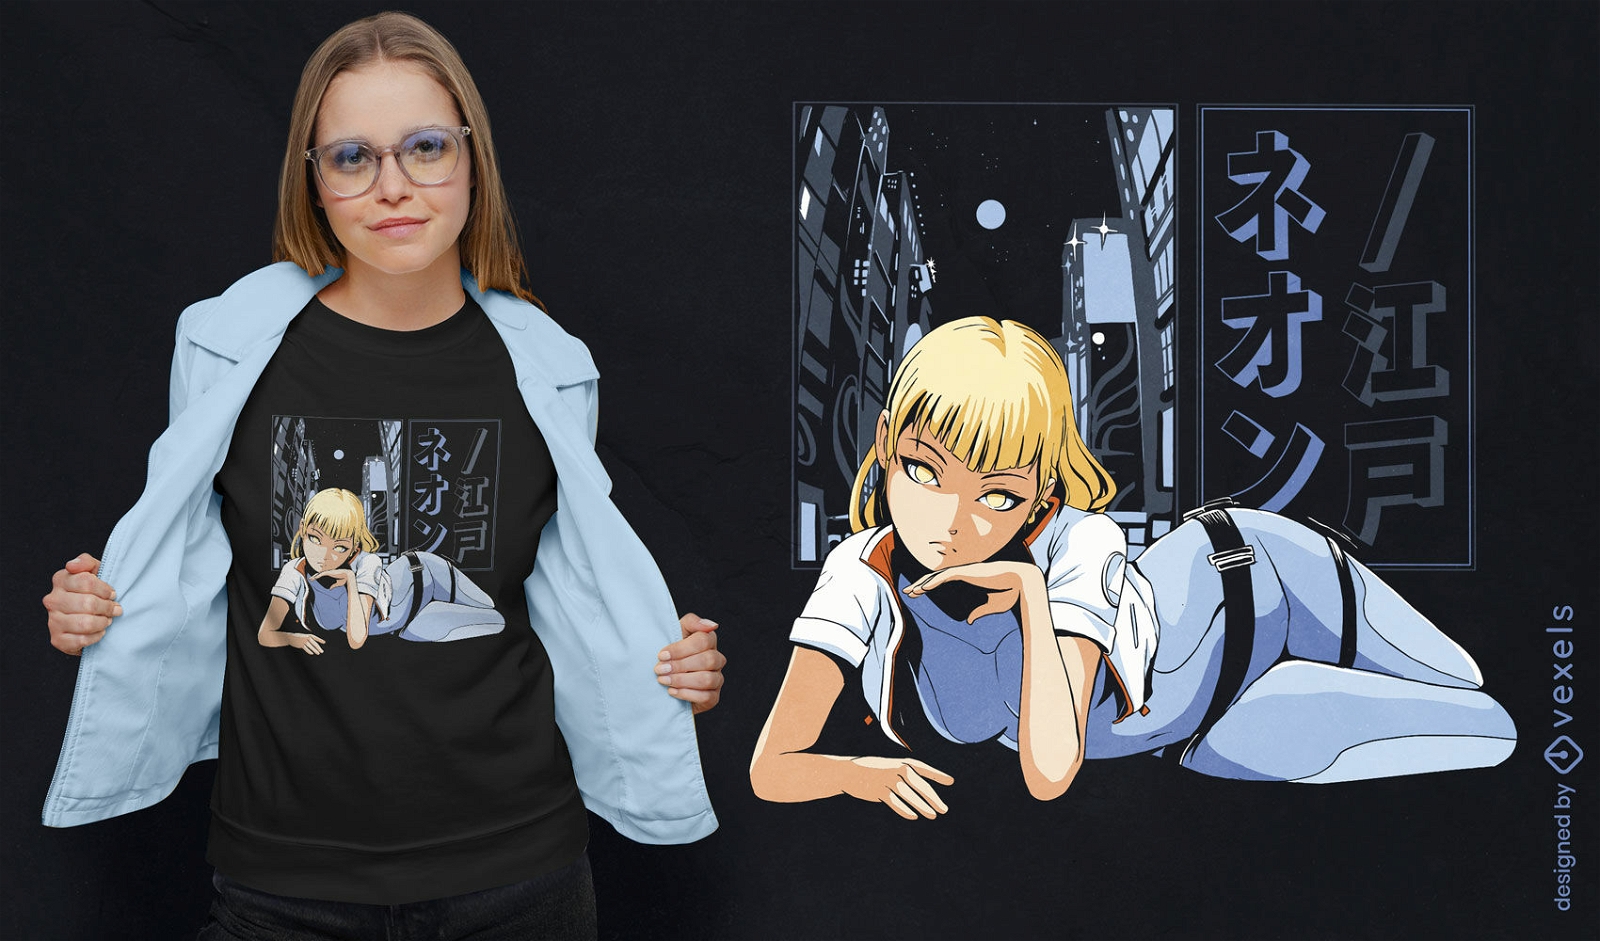 Futuristic anime girl t-shirt design